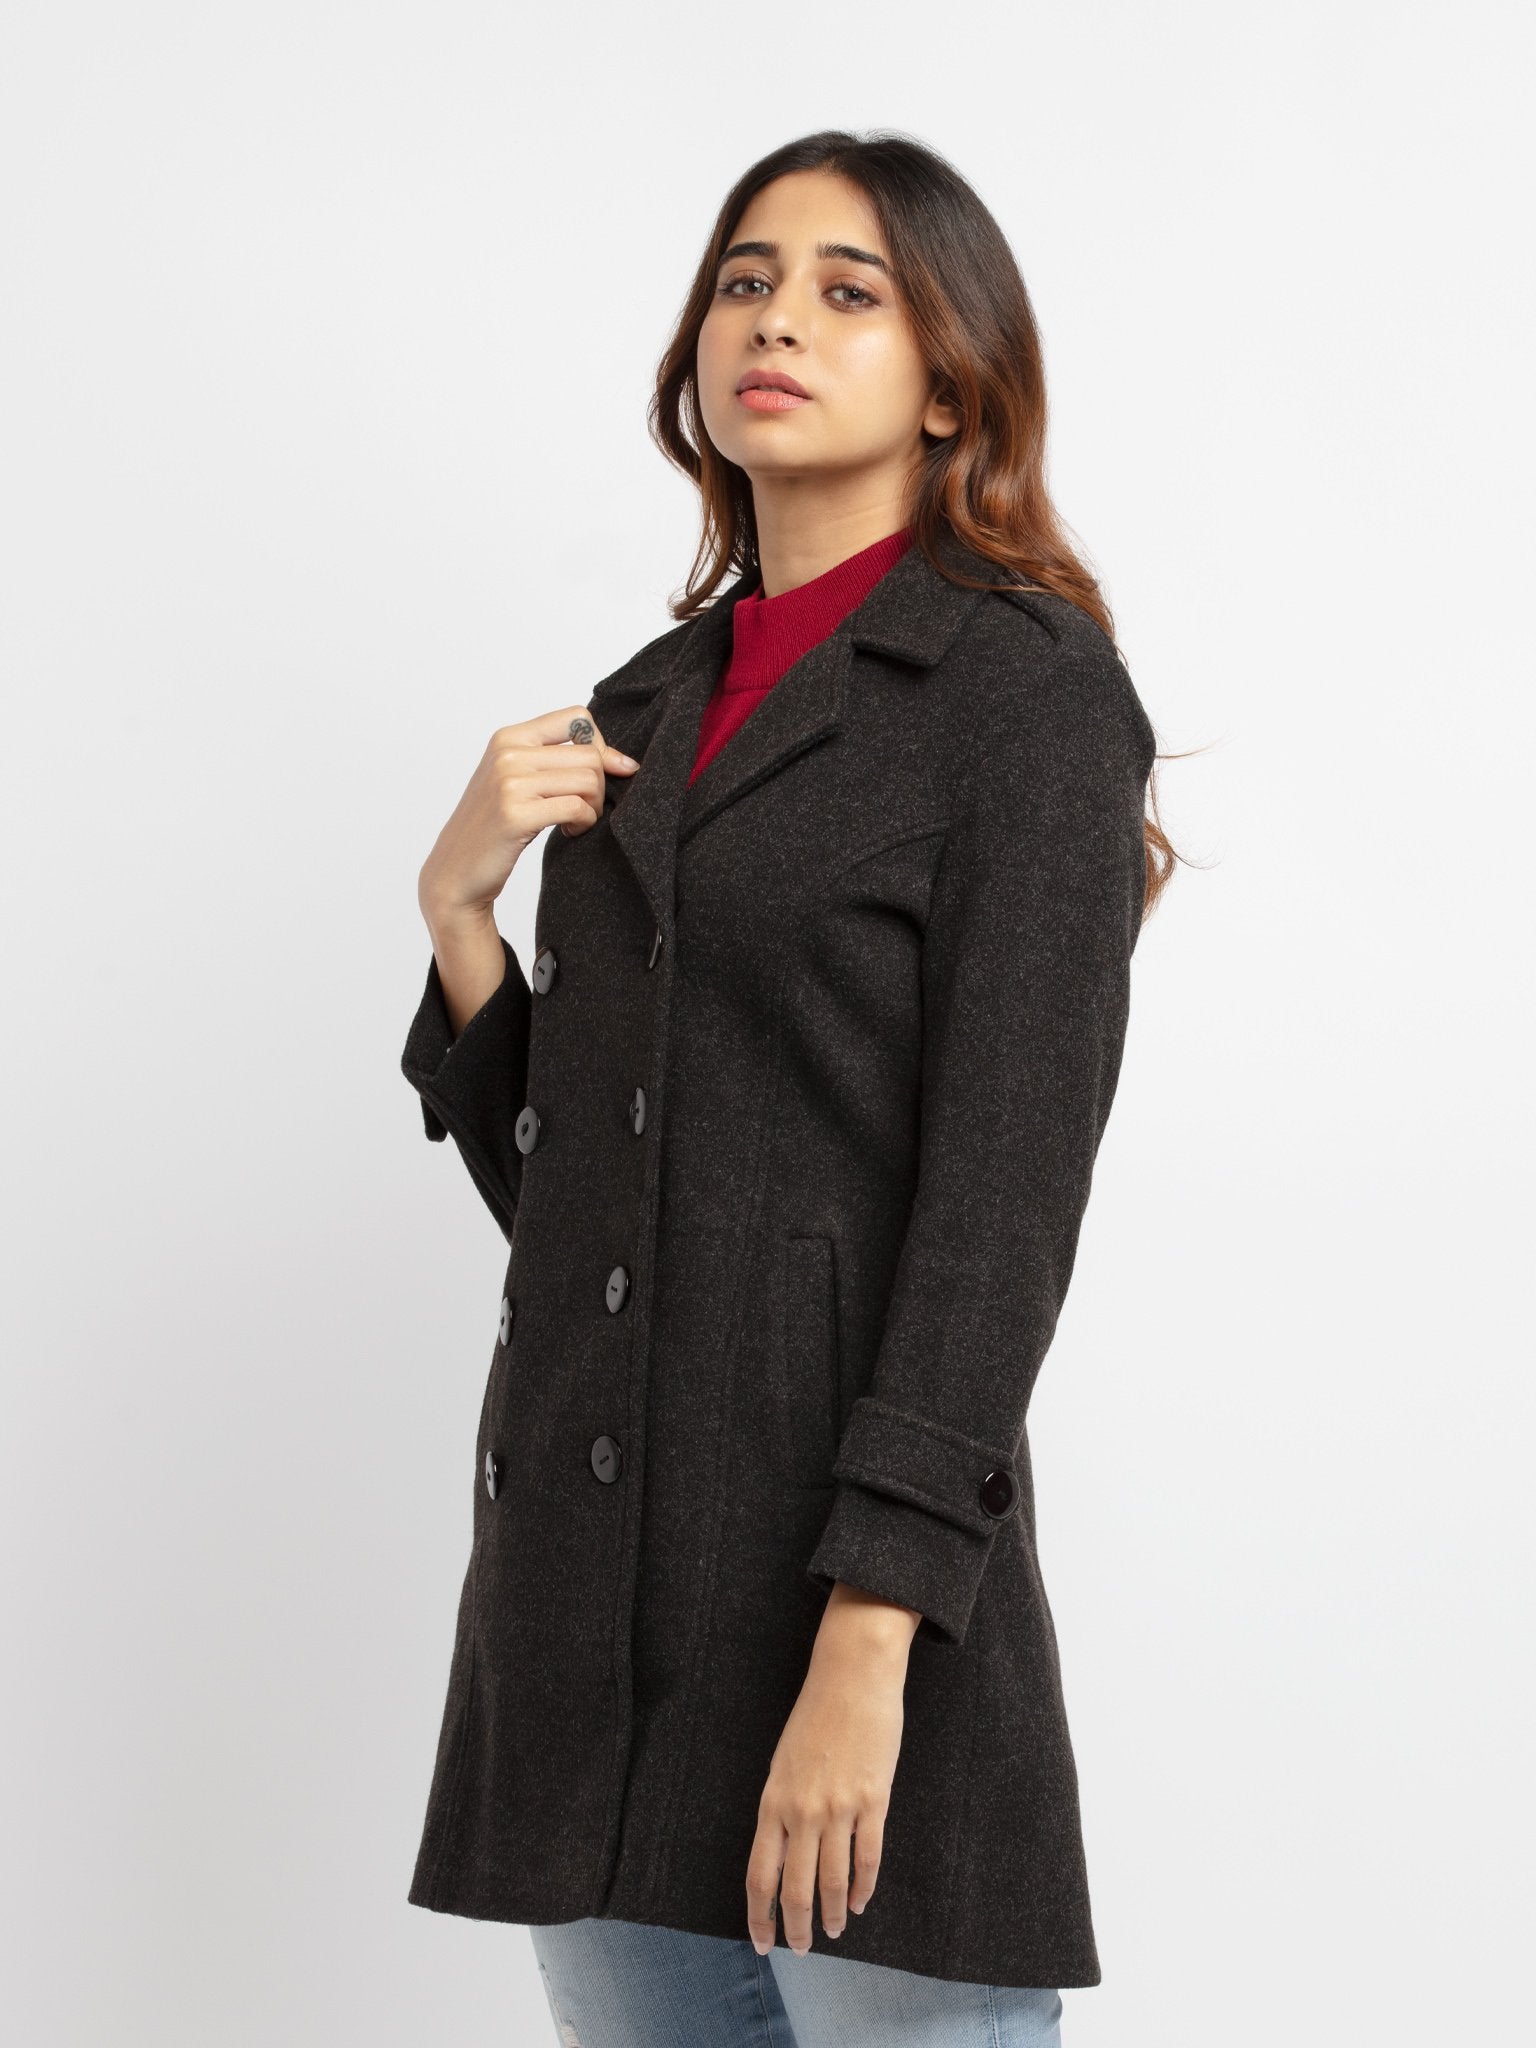 winter overcoats for women